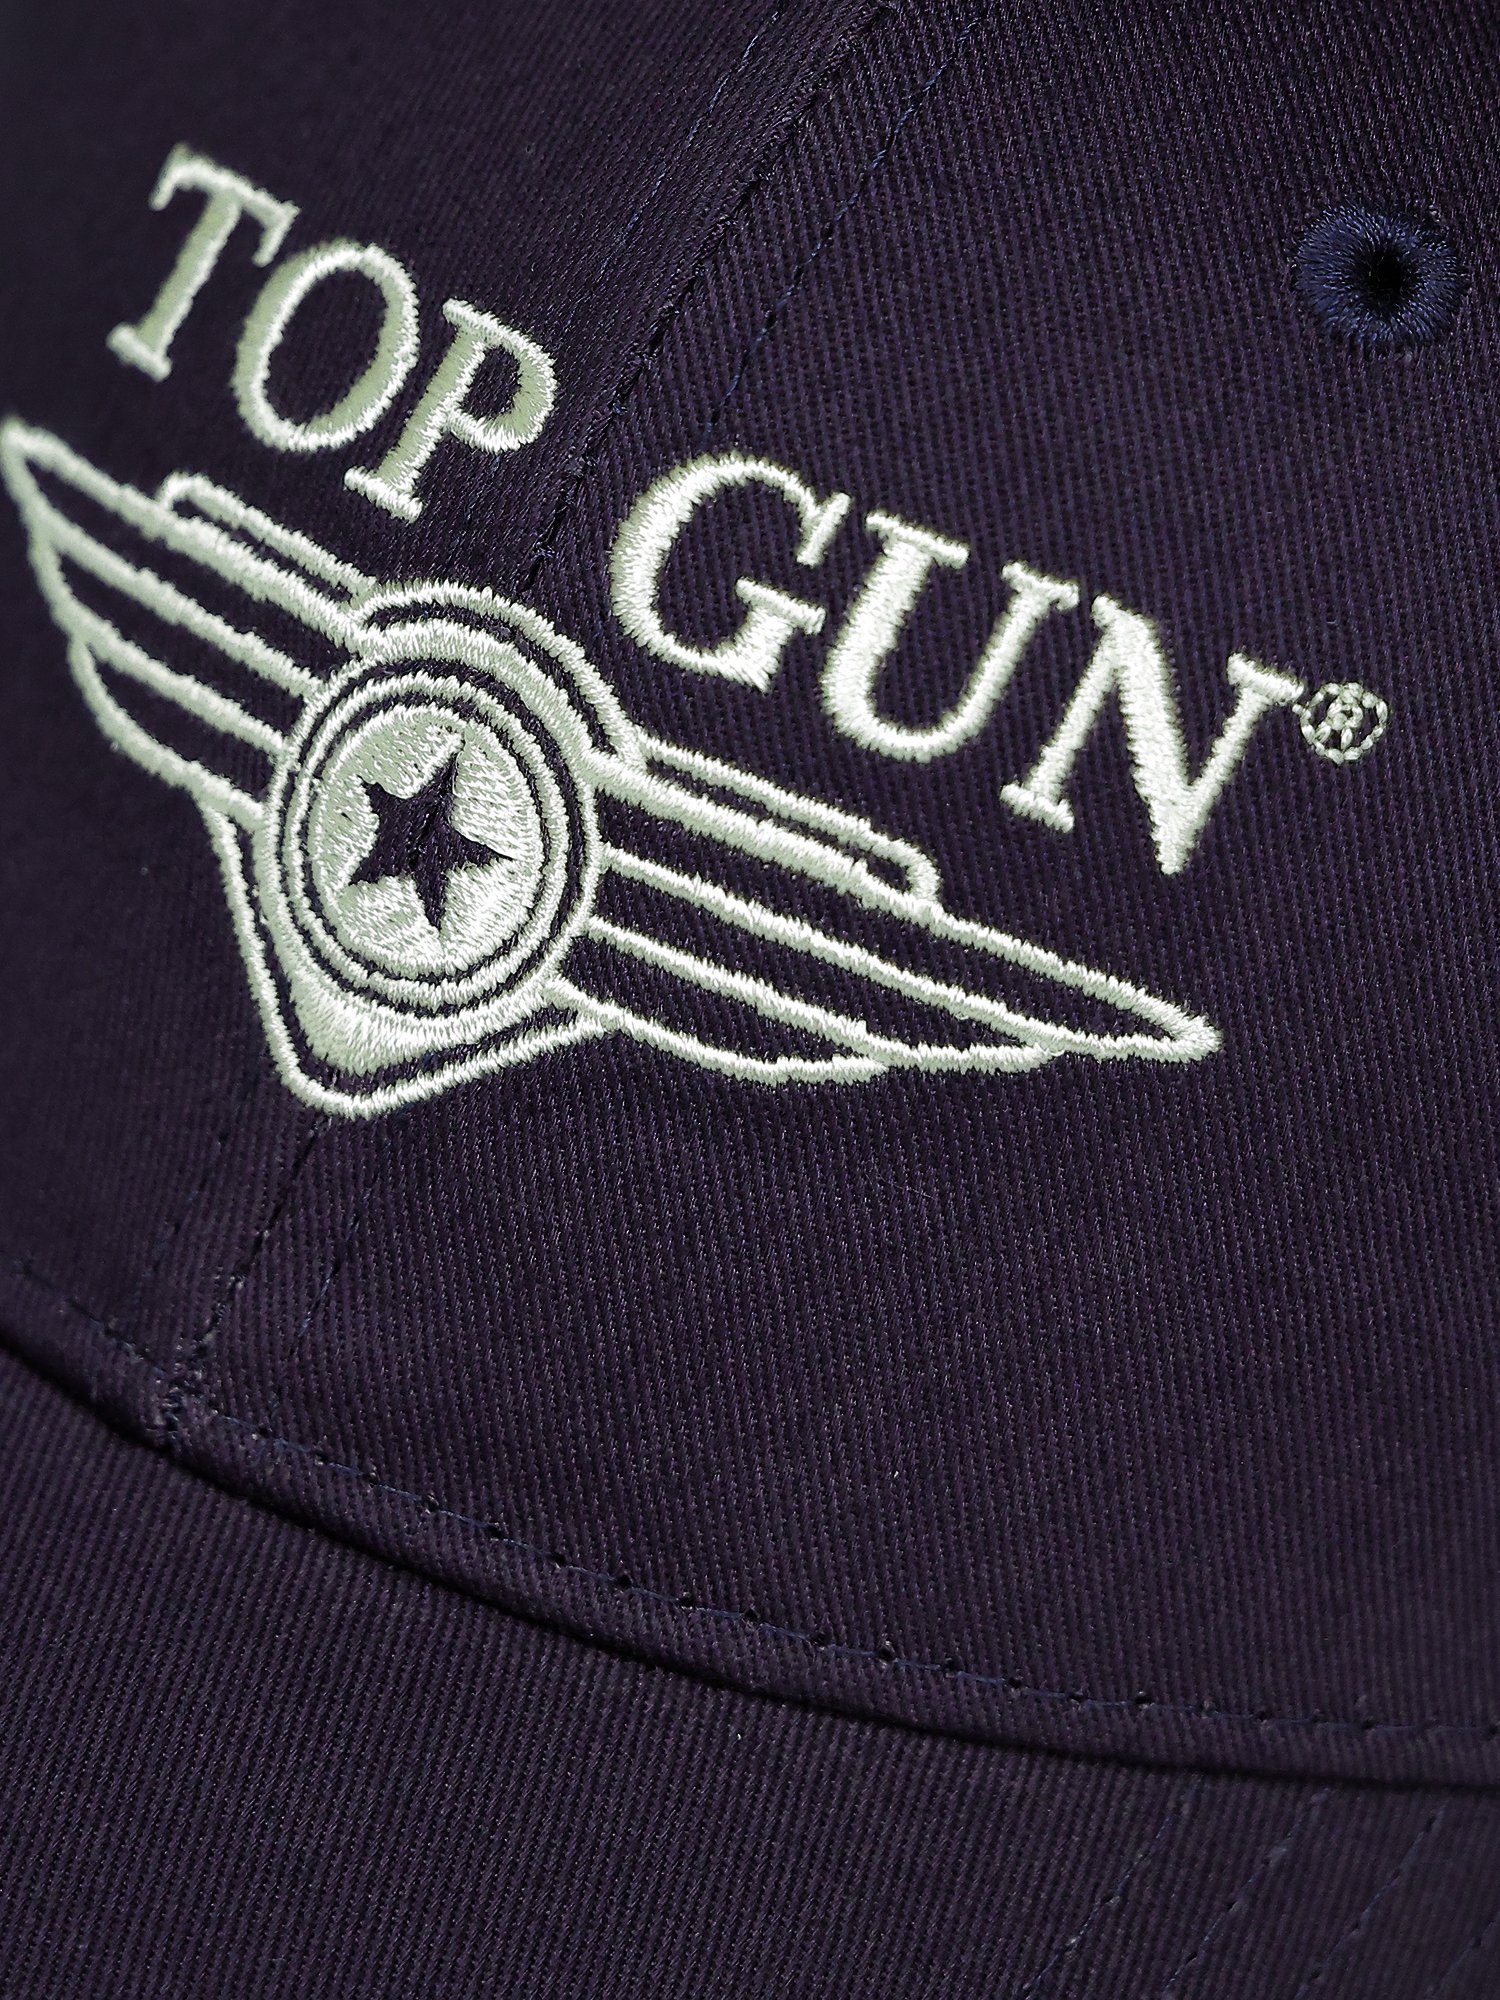 Snapback TOP navy Cap GUN TG22013